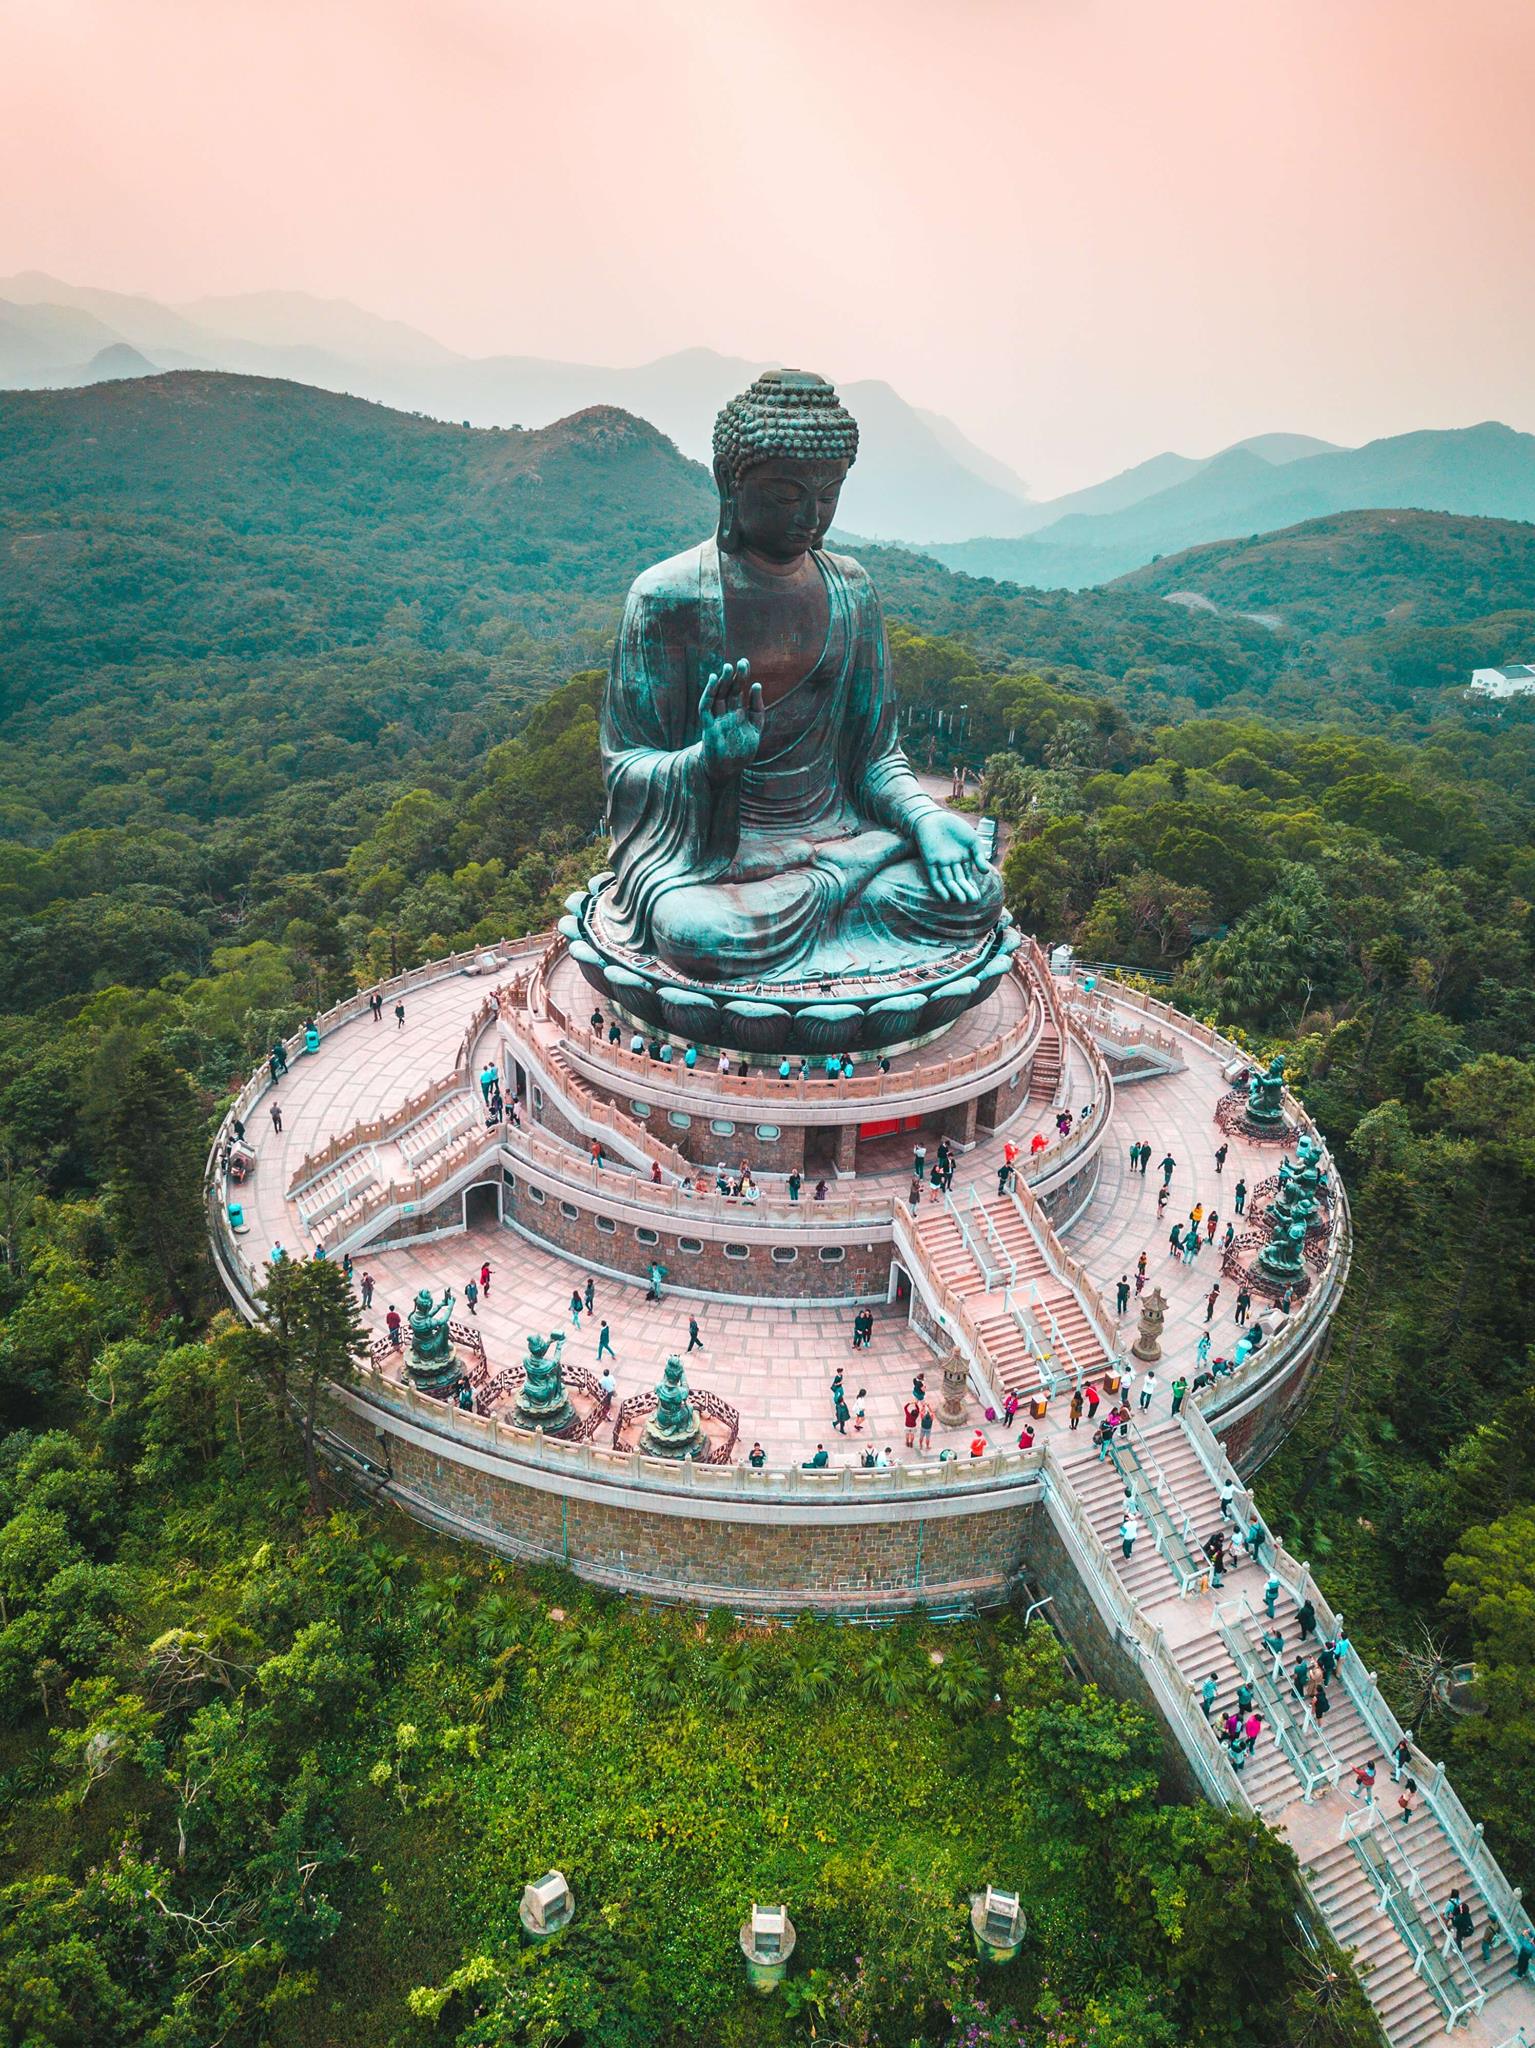 One of the major landmarks of Hong Kong, Big Buddha [photo credit: Jason Cooper]